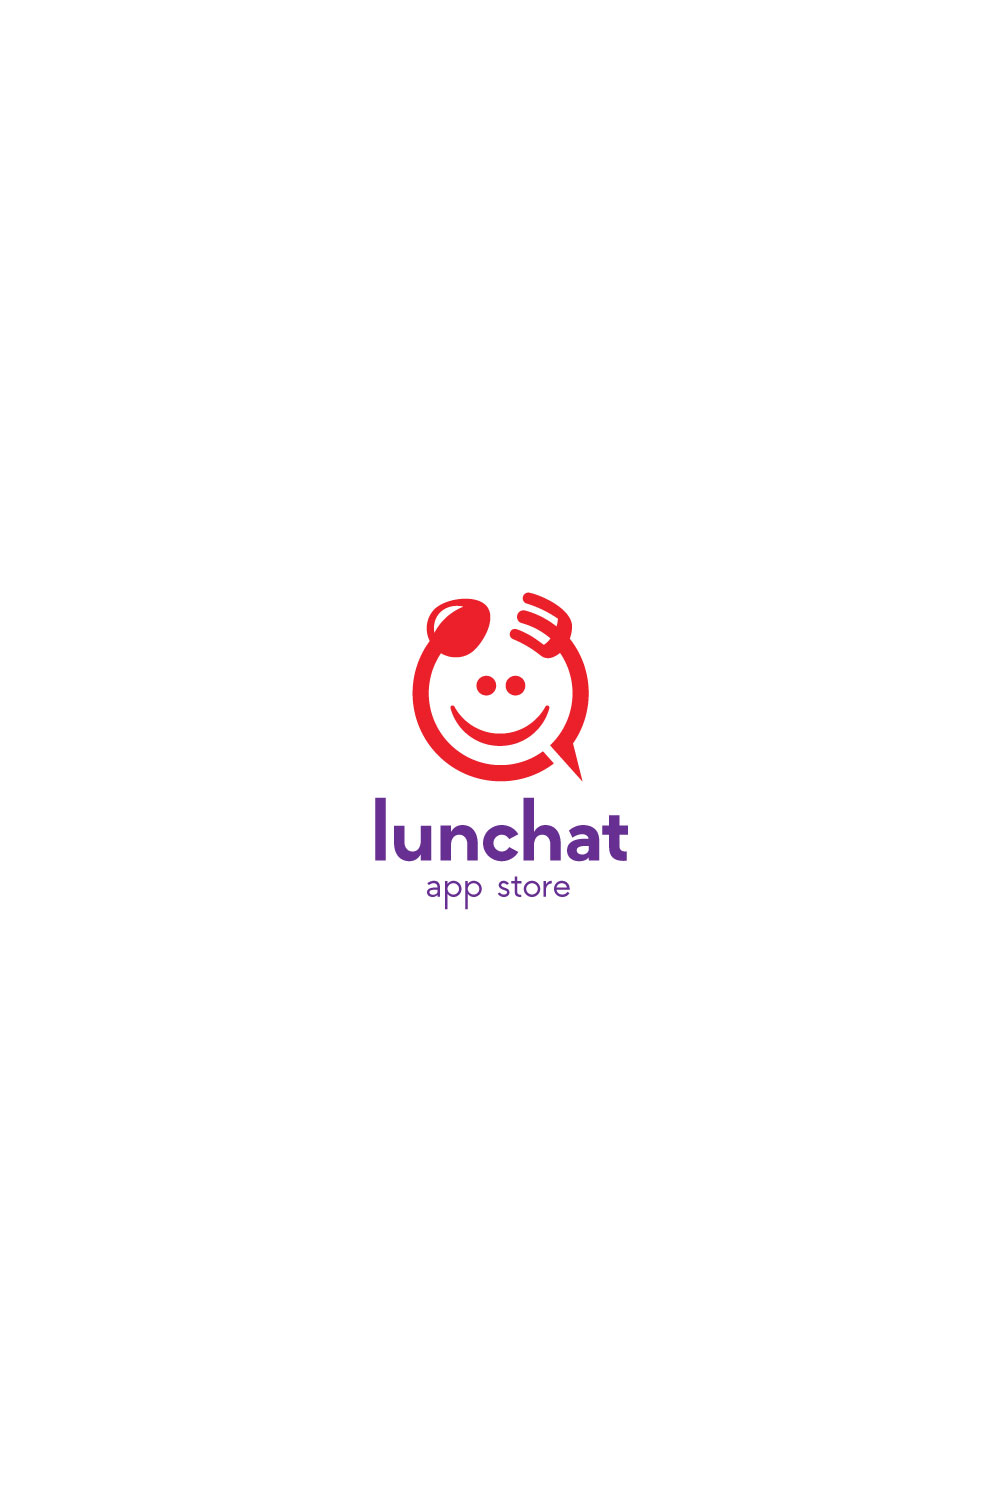 Restaurant Chat logo design vector pinterest preview image.